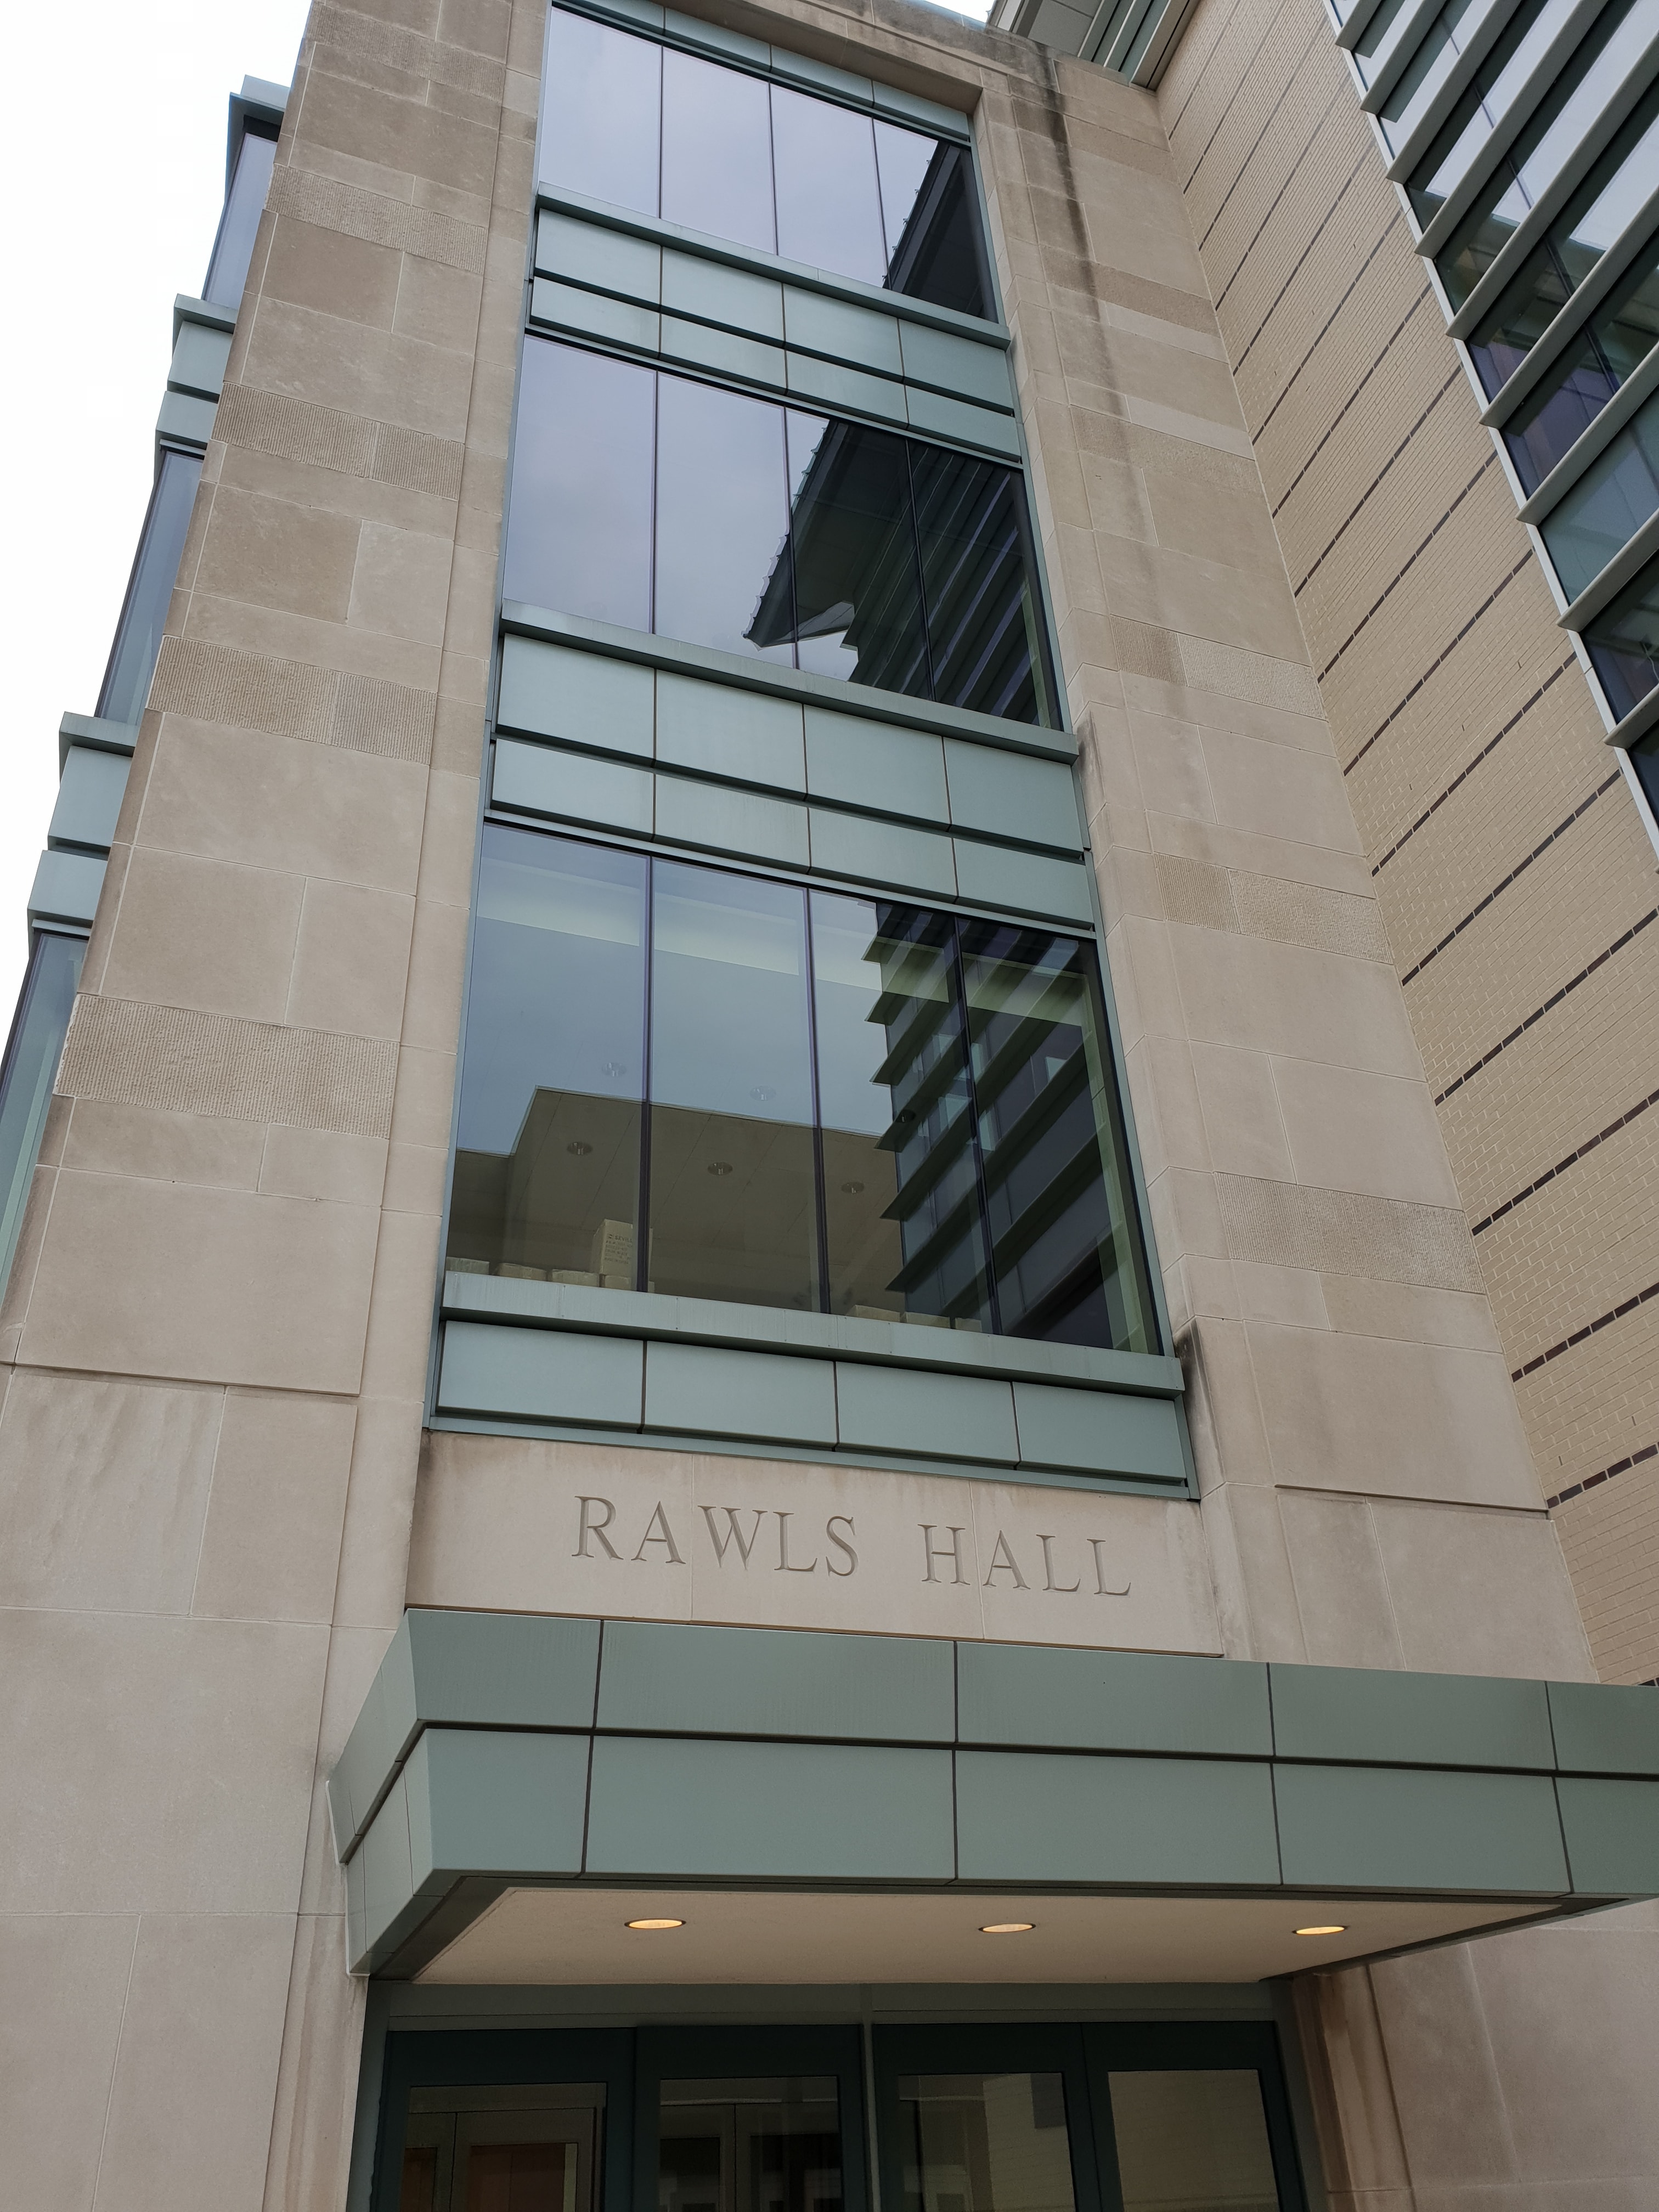 Rawls Hall